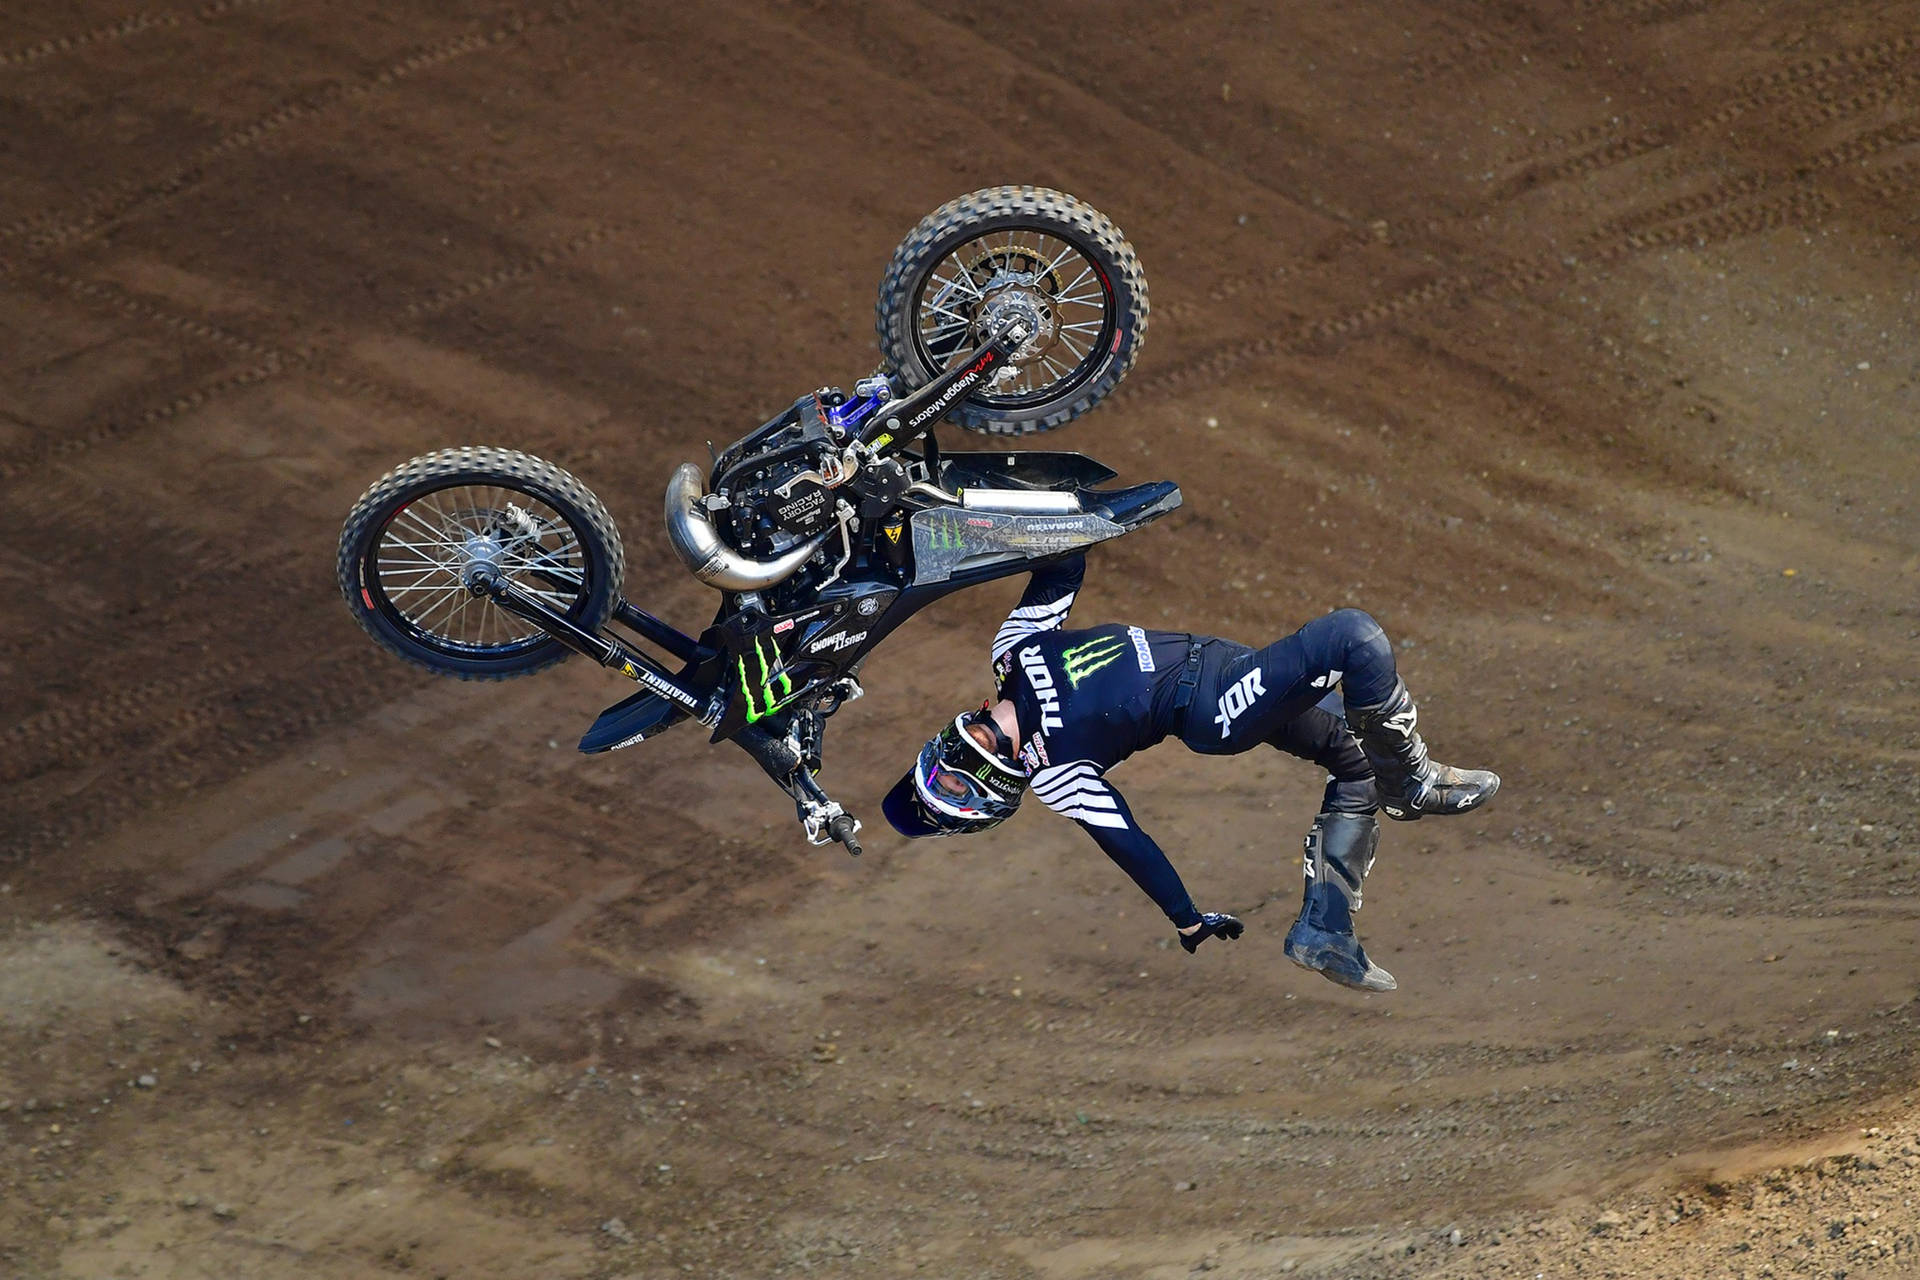 X Games Motocross Aerial Backflip Wallpaper